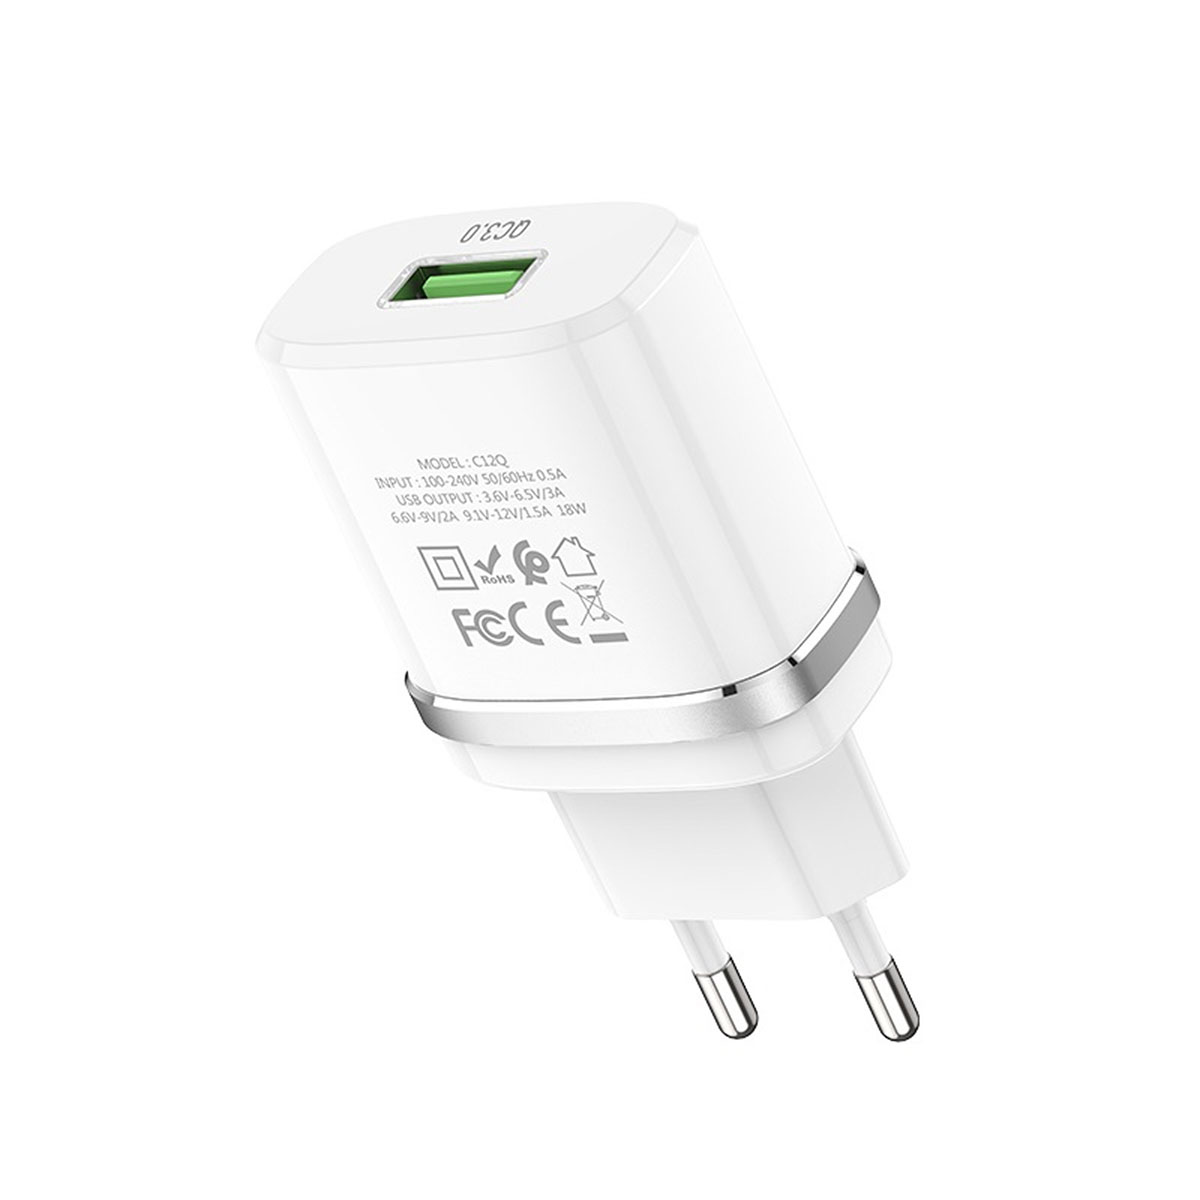 HOCO C12Q Smart CЗУ (Сетевое зарядное устройство) QC3.0, 1 USB, c кабелем Micro USB, цвет белый.